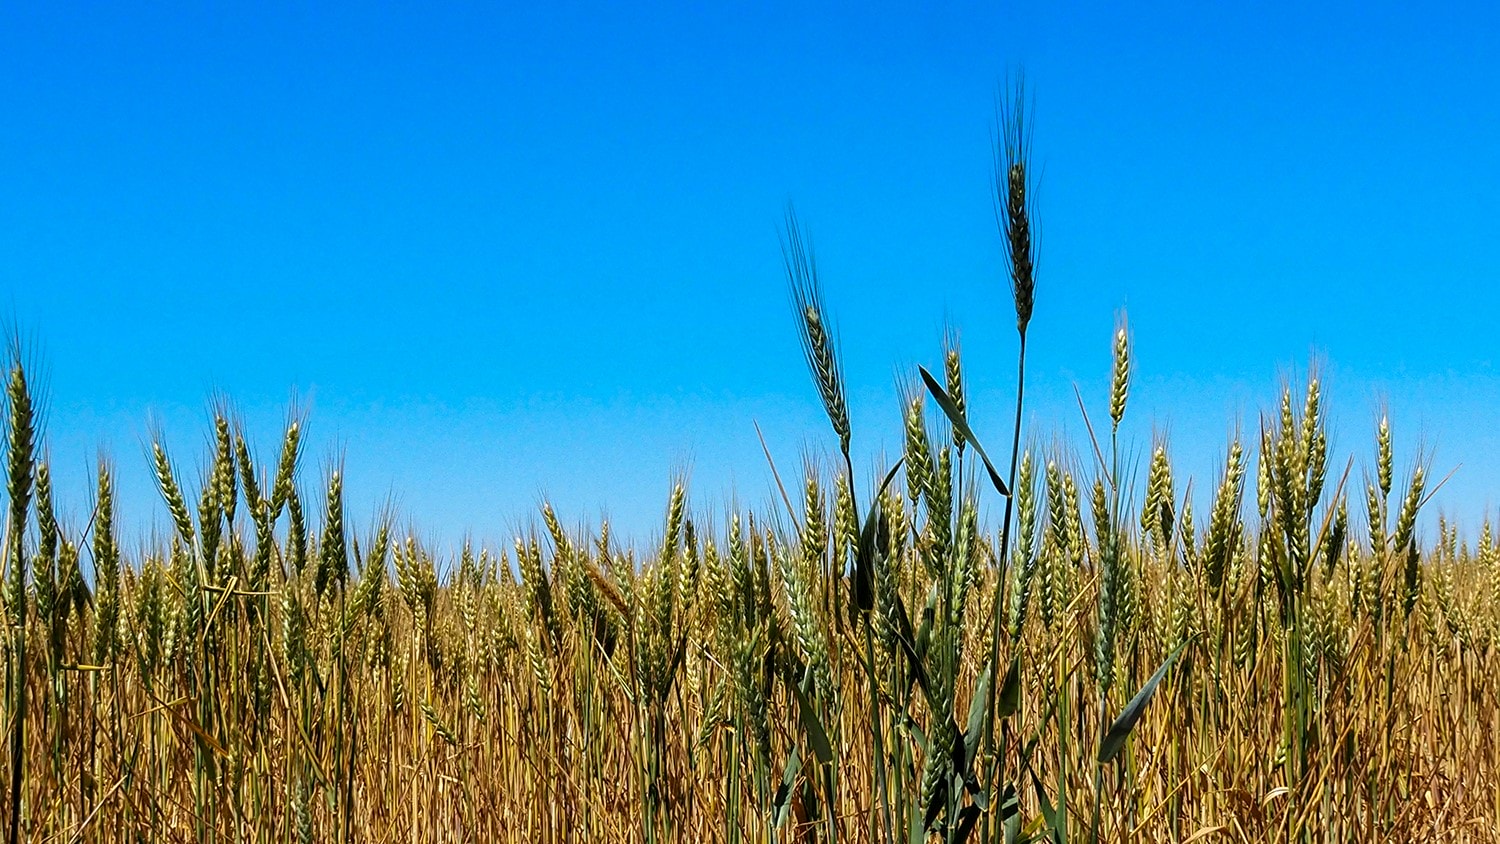 A wheat field under blue skies.